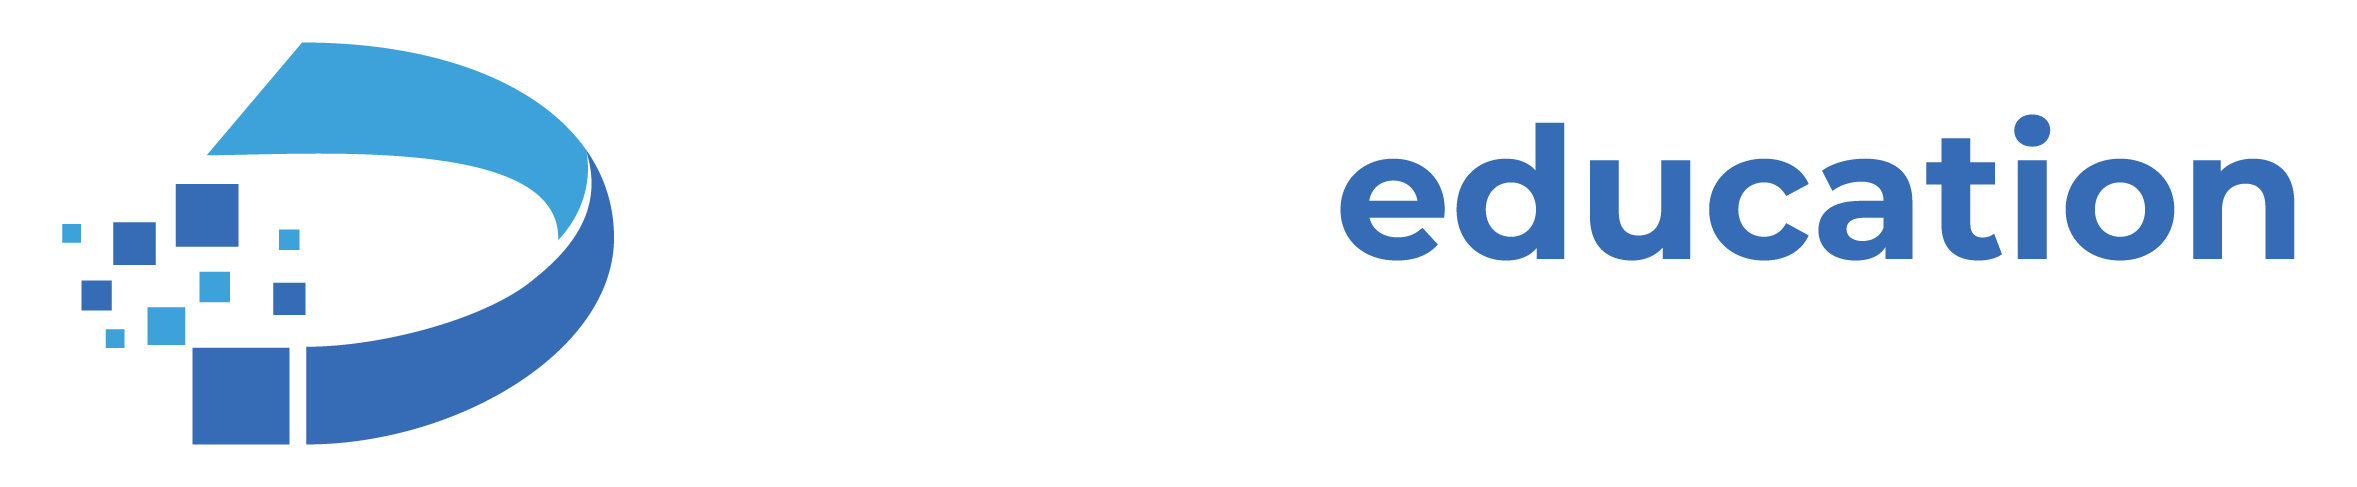 Digital Education Group_1a